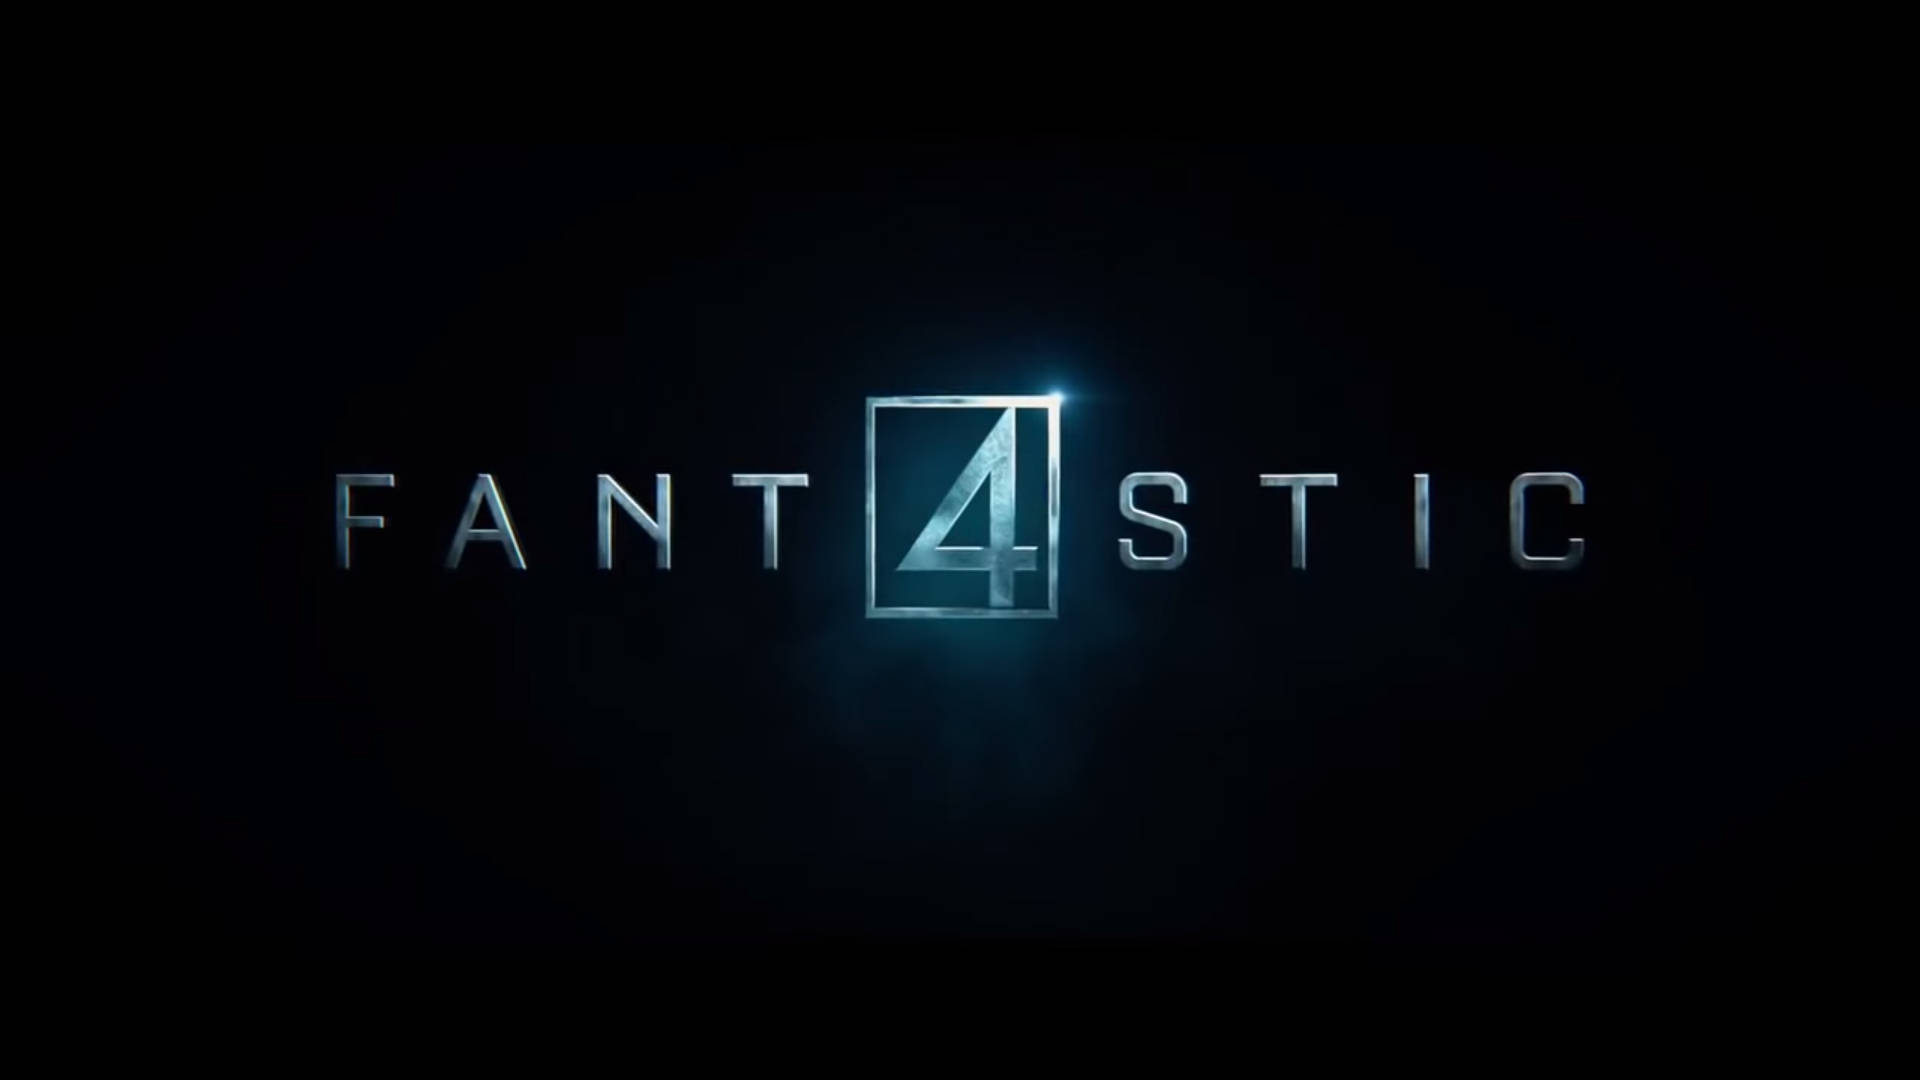 Fantastic Four 2015 Silver Logo Background